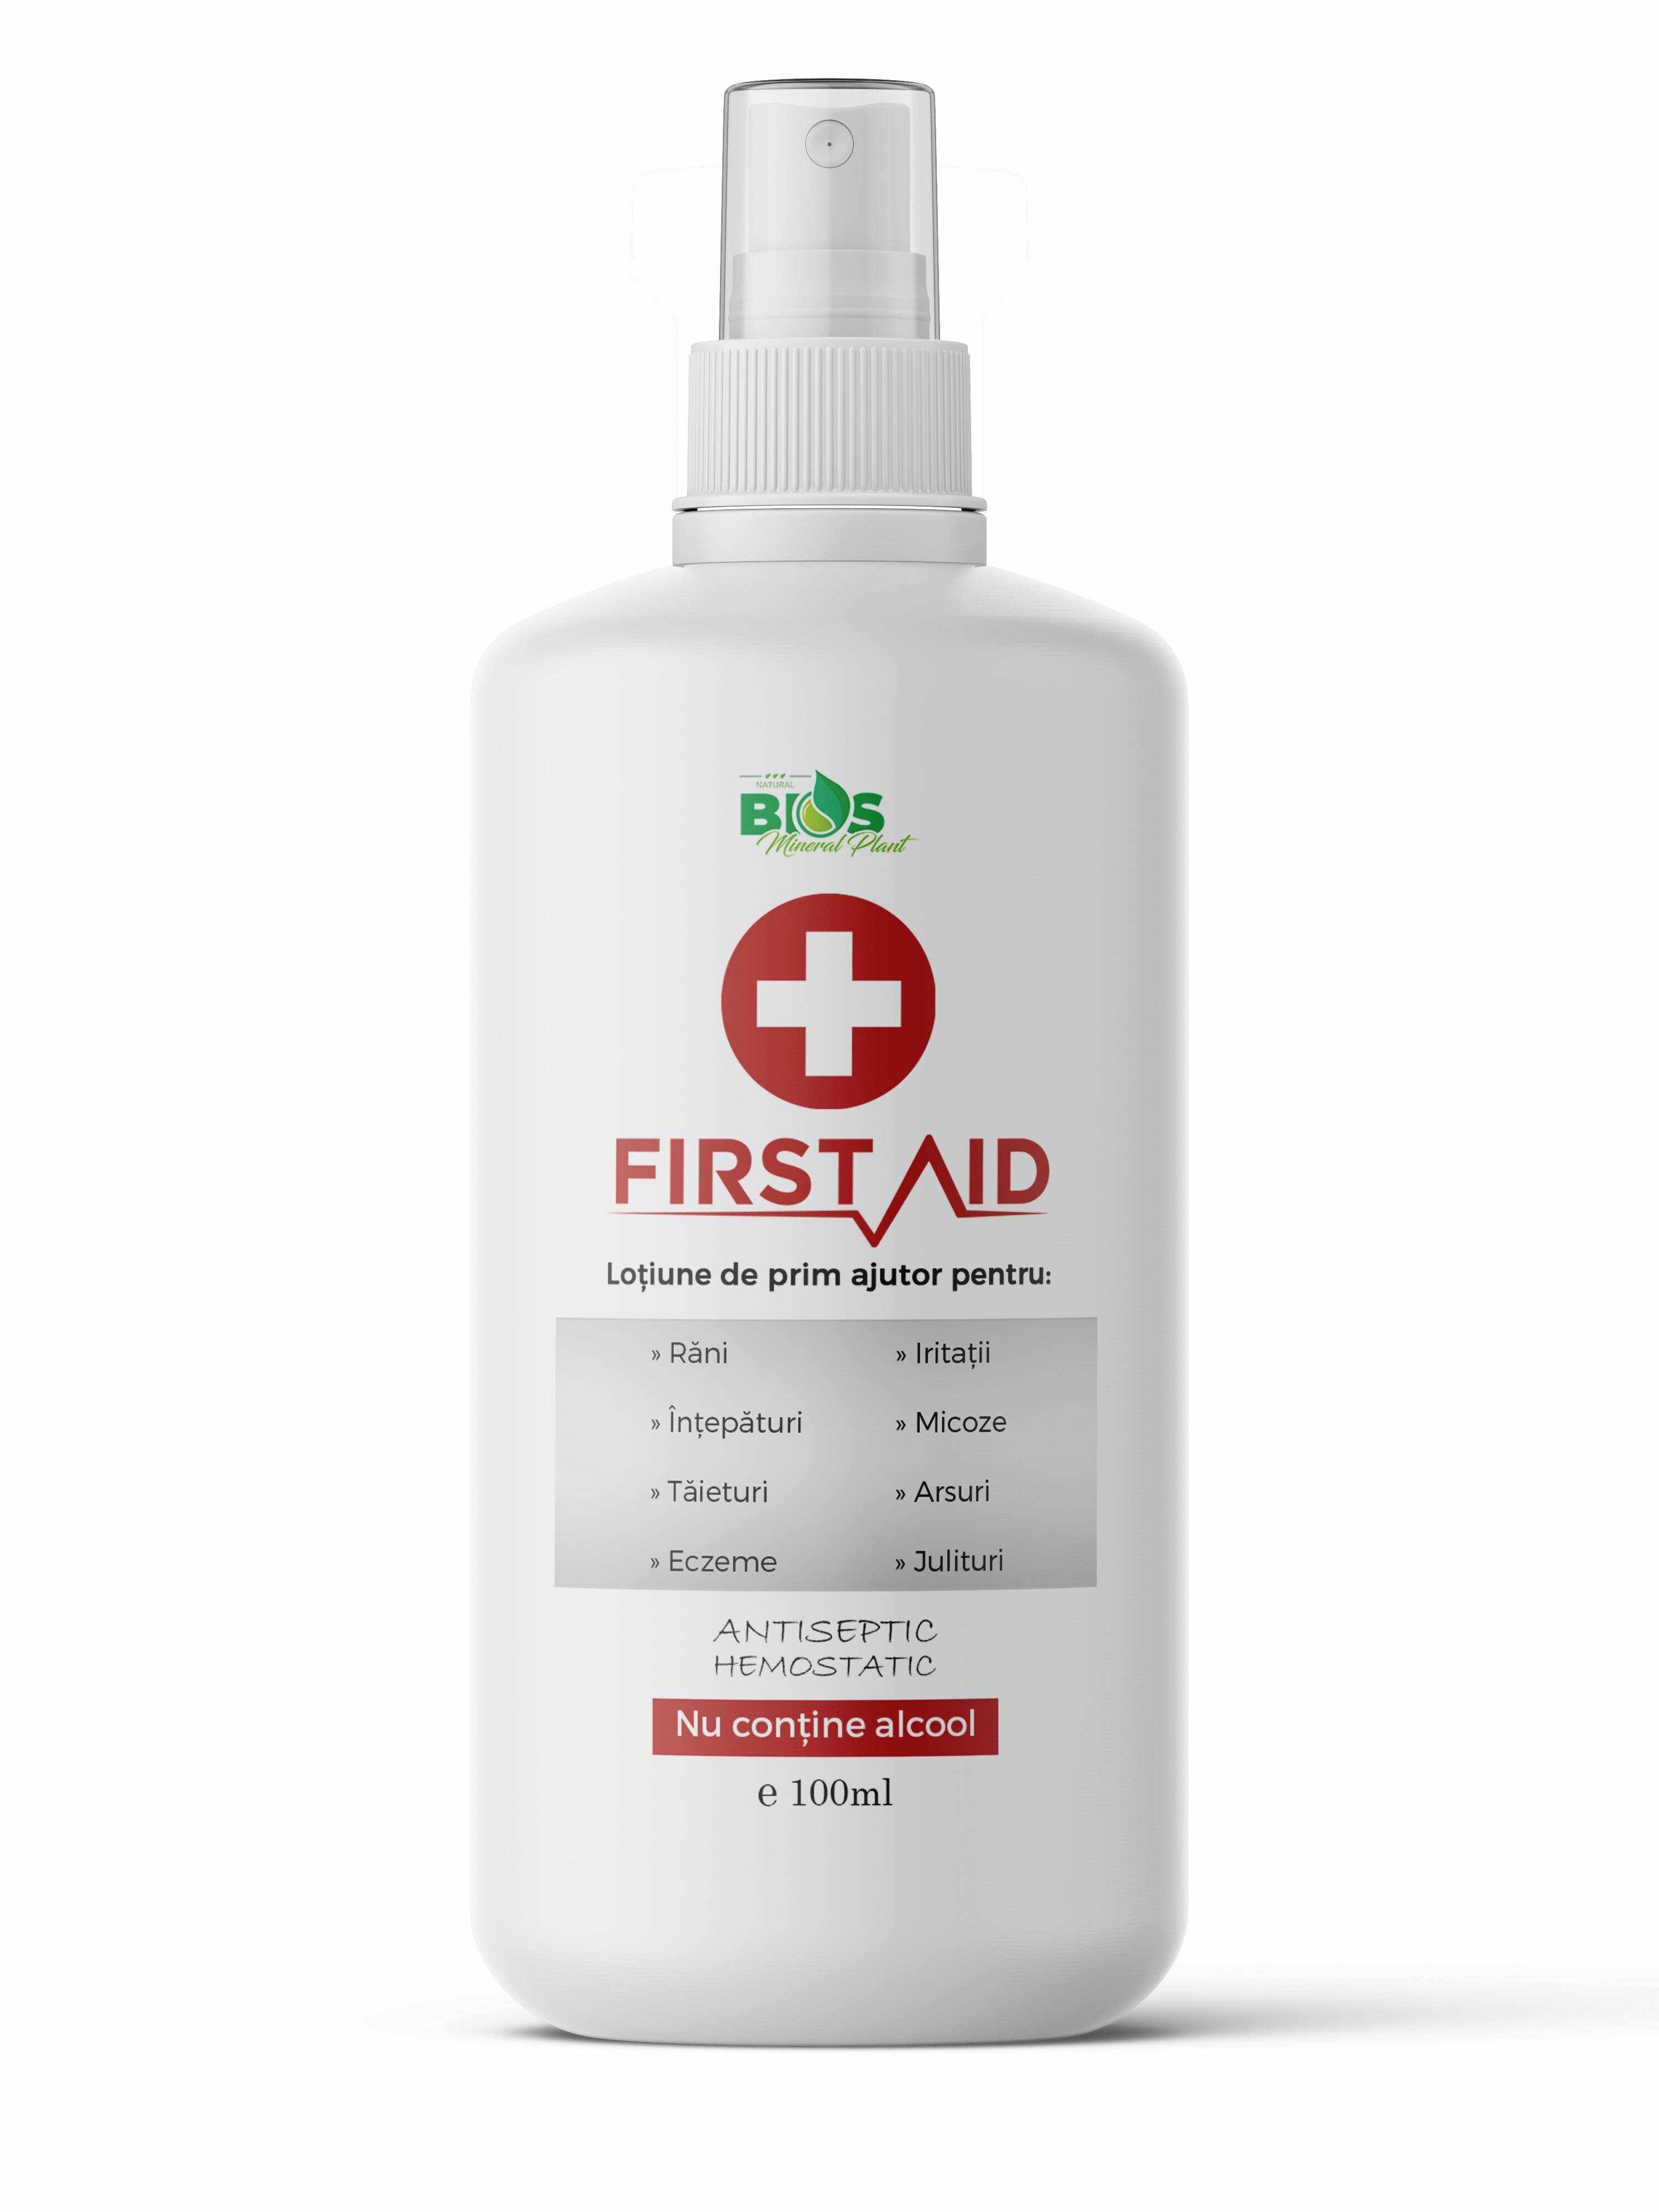 First Aid, lotiune de prim ajutor, 100ml - Bios Mineral Plant